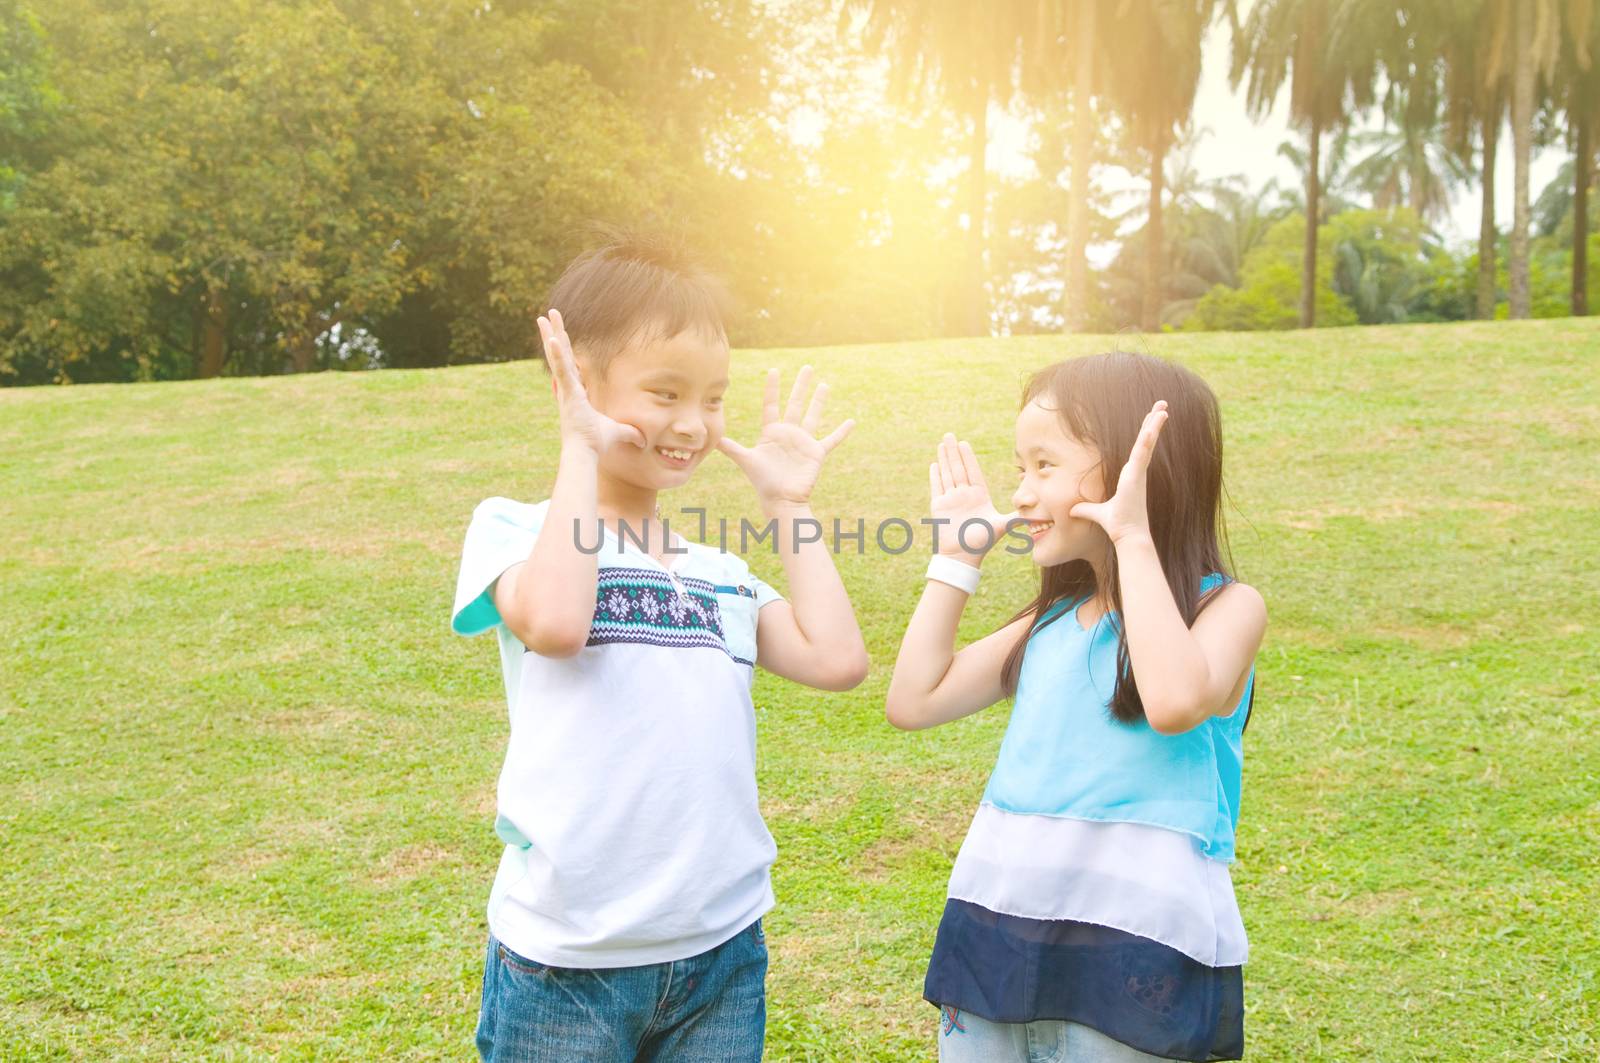 Asian children having fun at outdoor